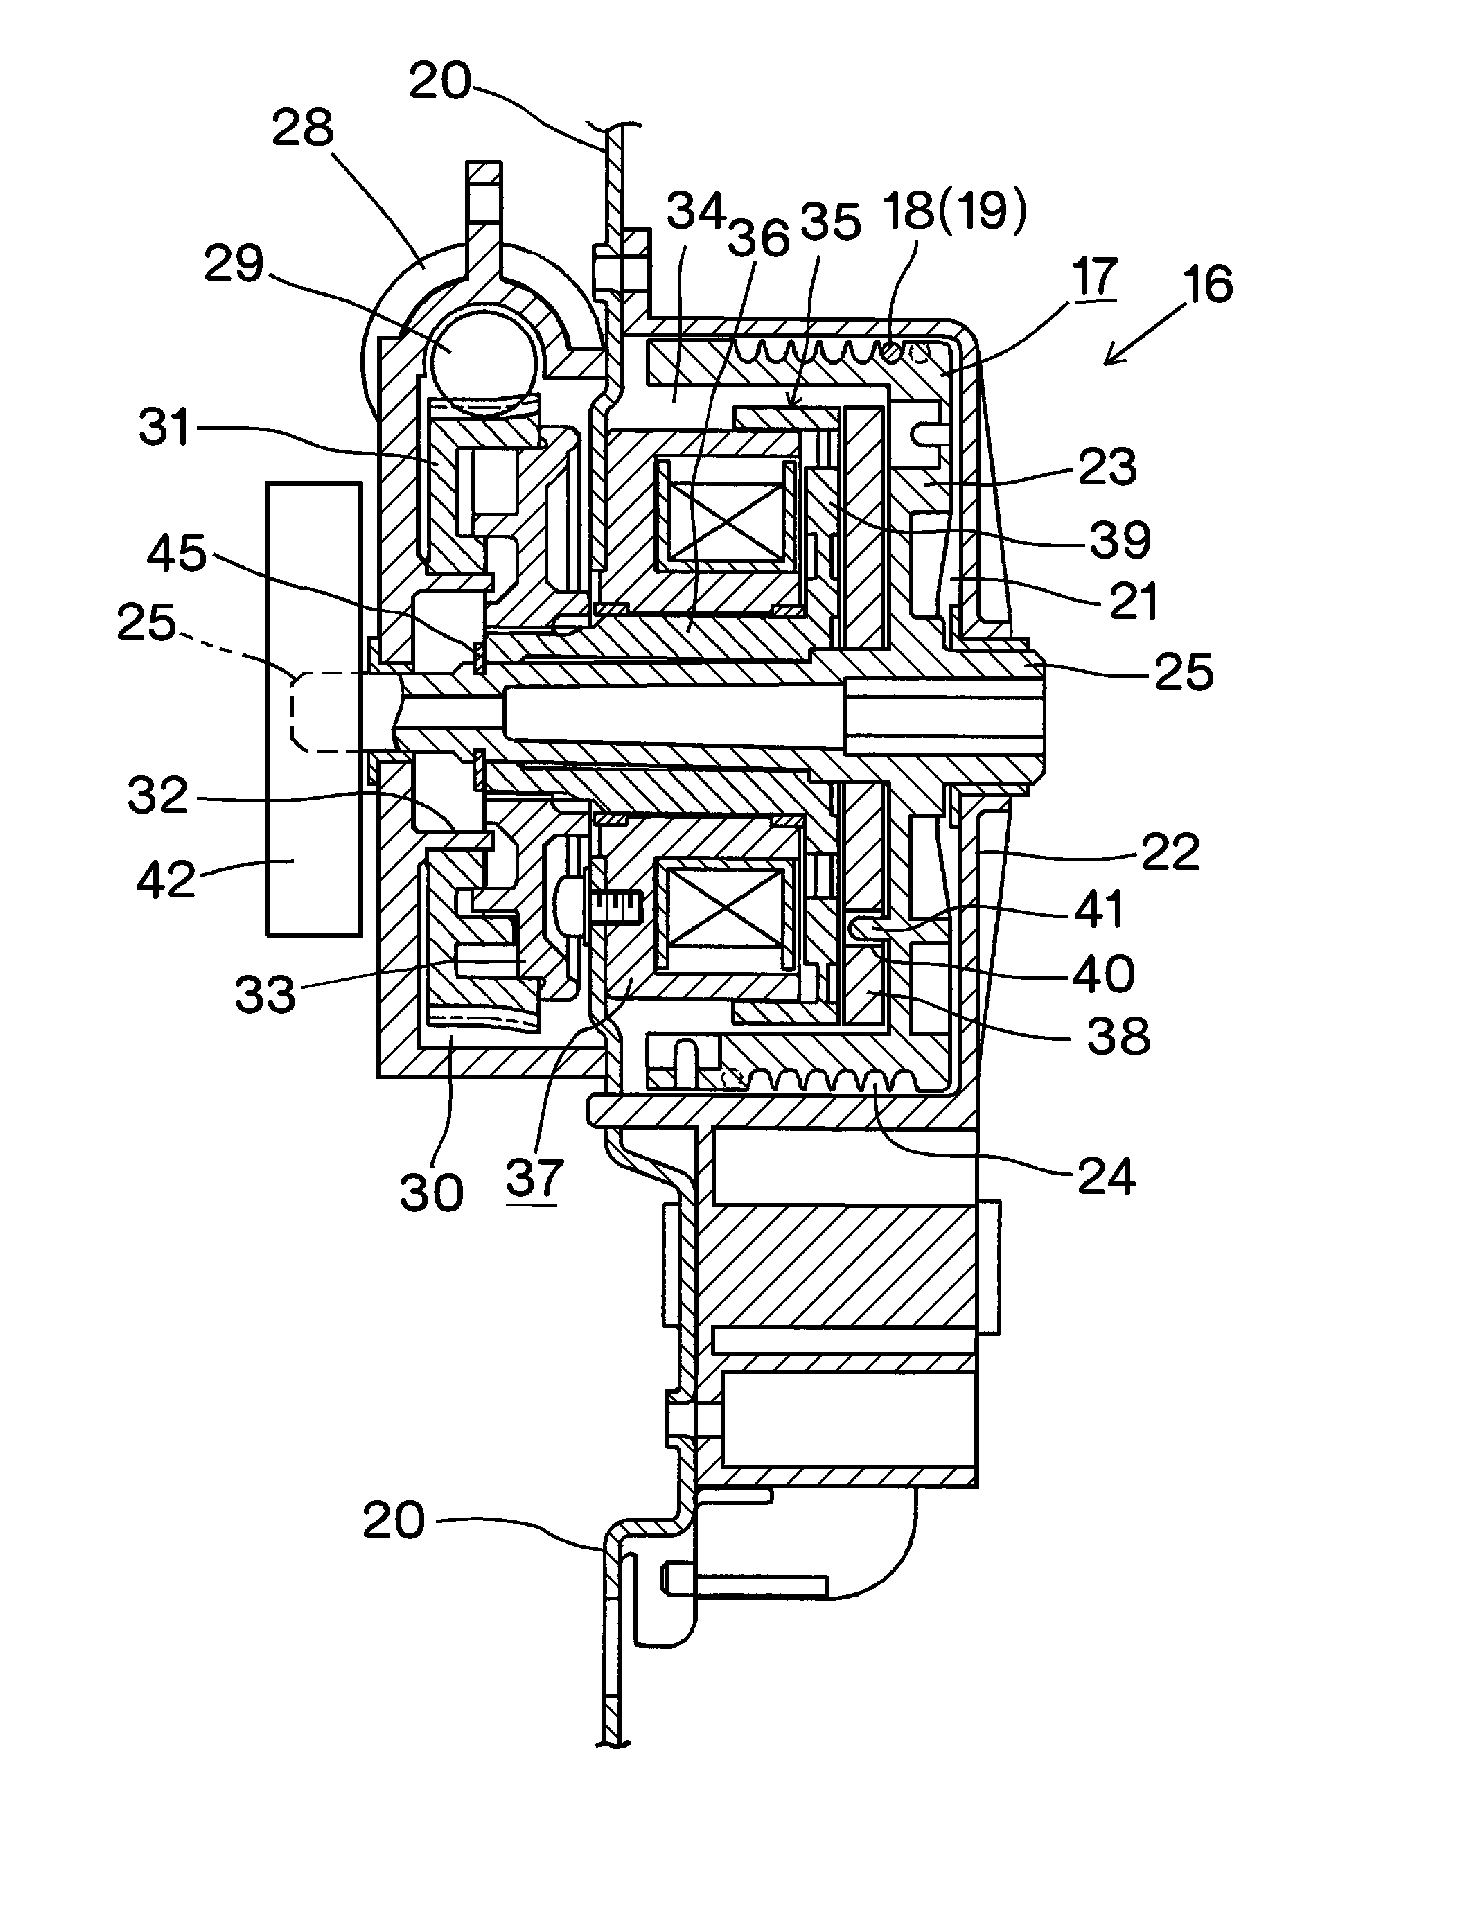 Power unit for power slide apparatus